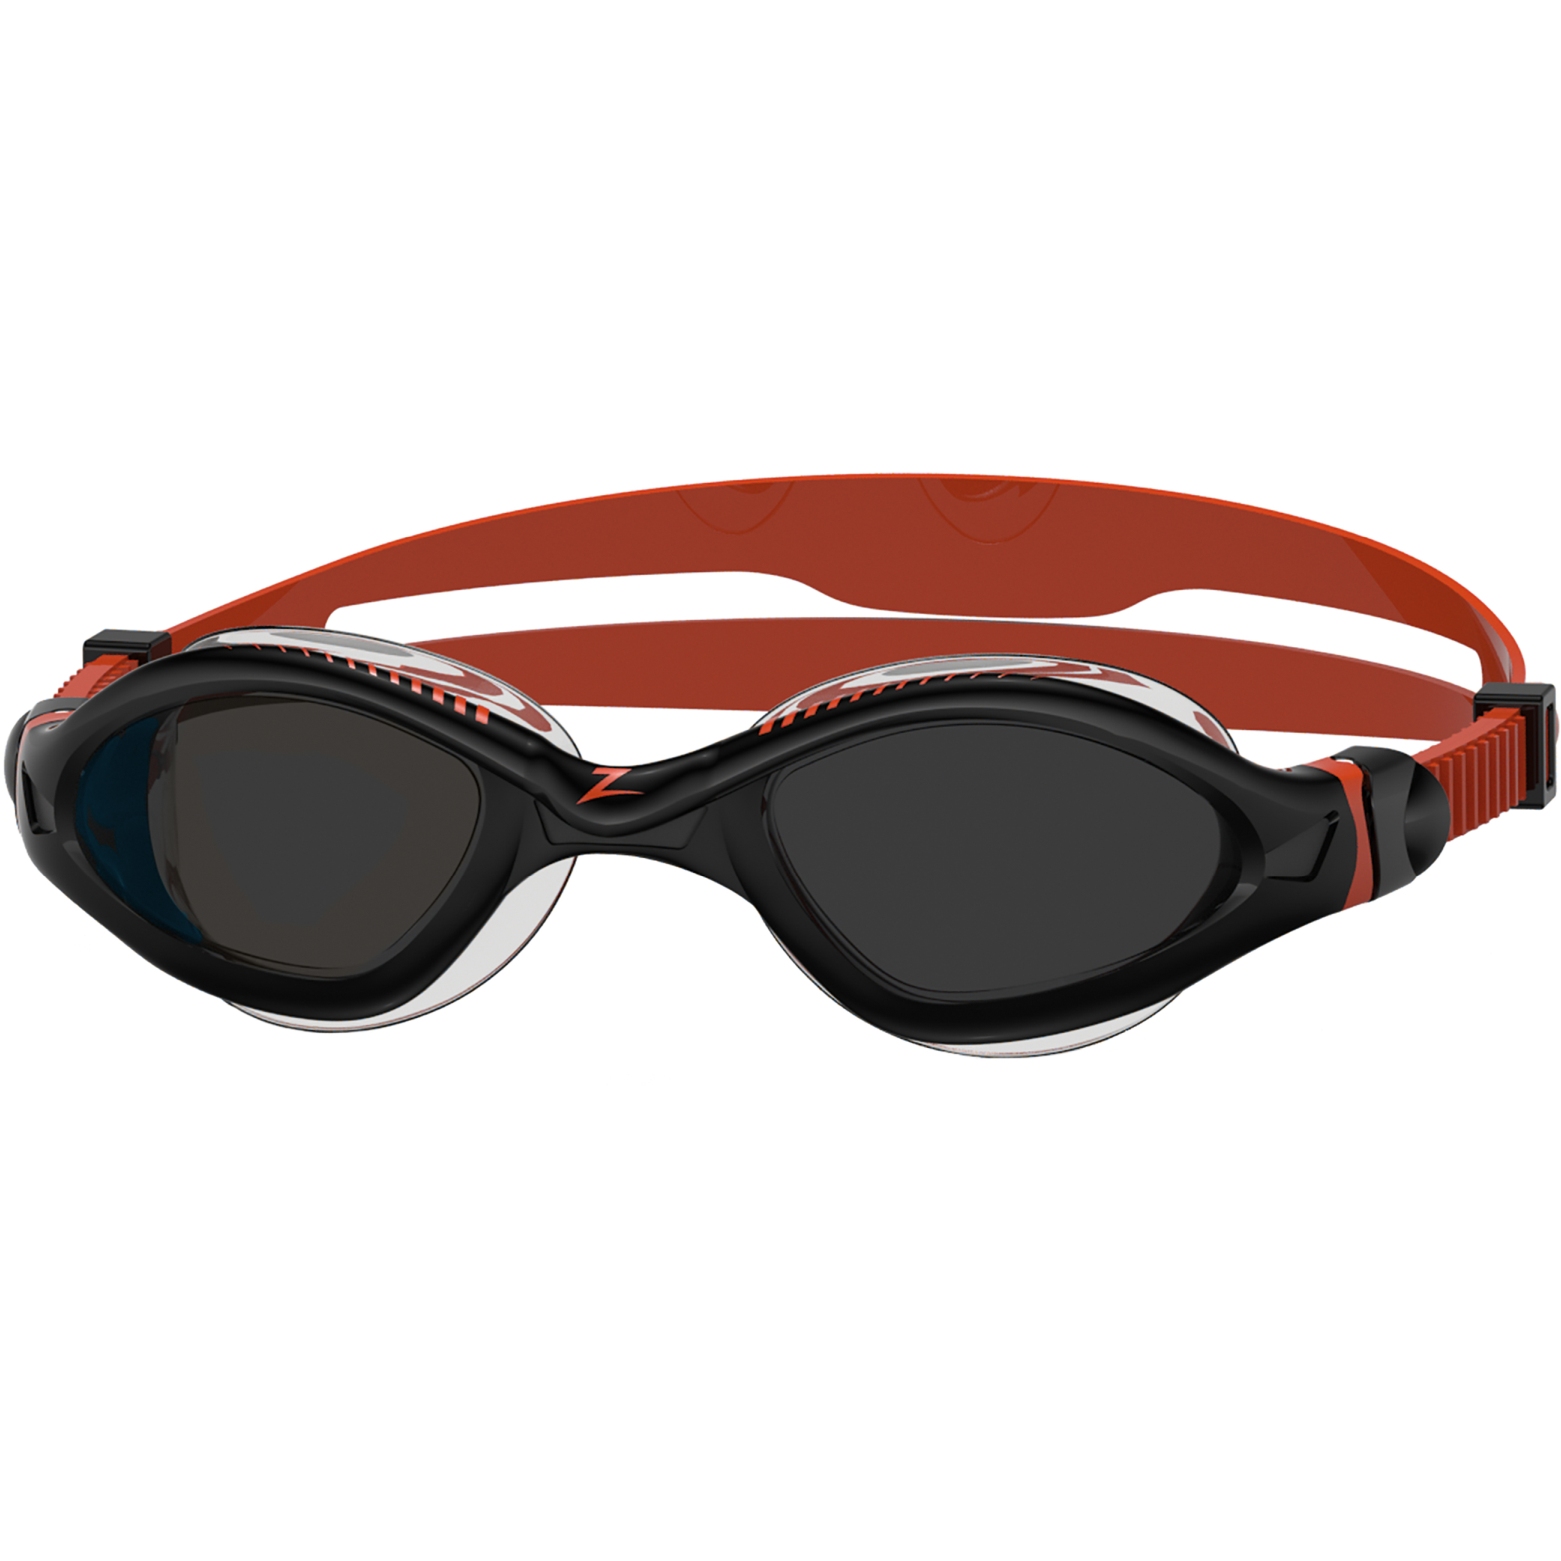 Productfoto van Zoggs Tiger LSR+ Swim Goggles - Black/Orange/Tint Smoke